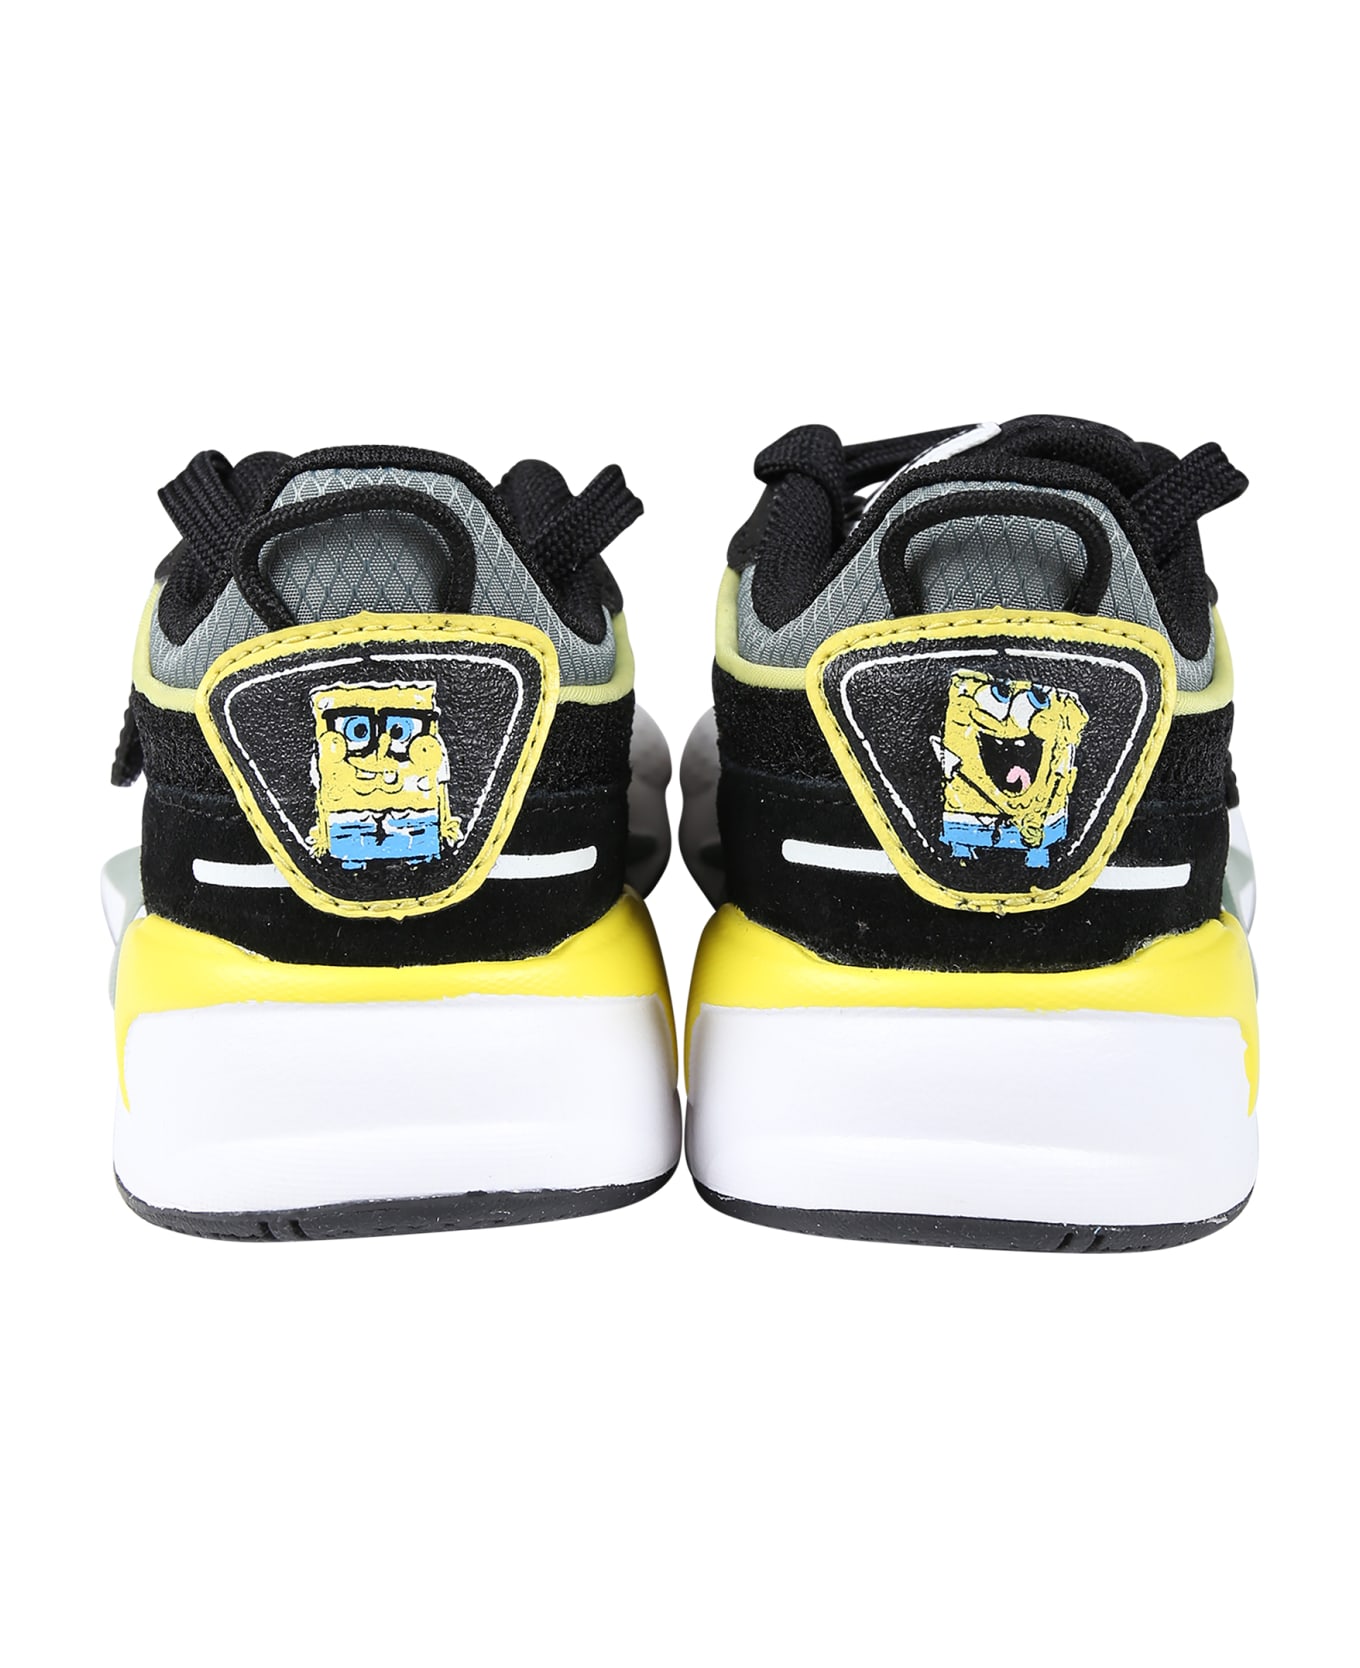 Puma Multicolor Sneakers For Boy With Logo - Black